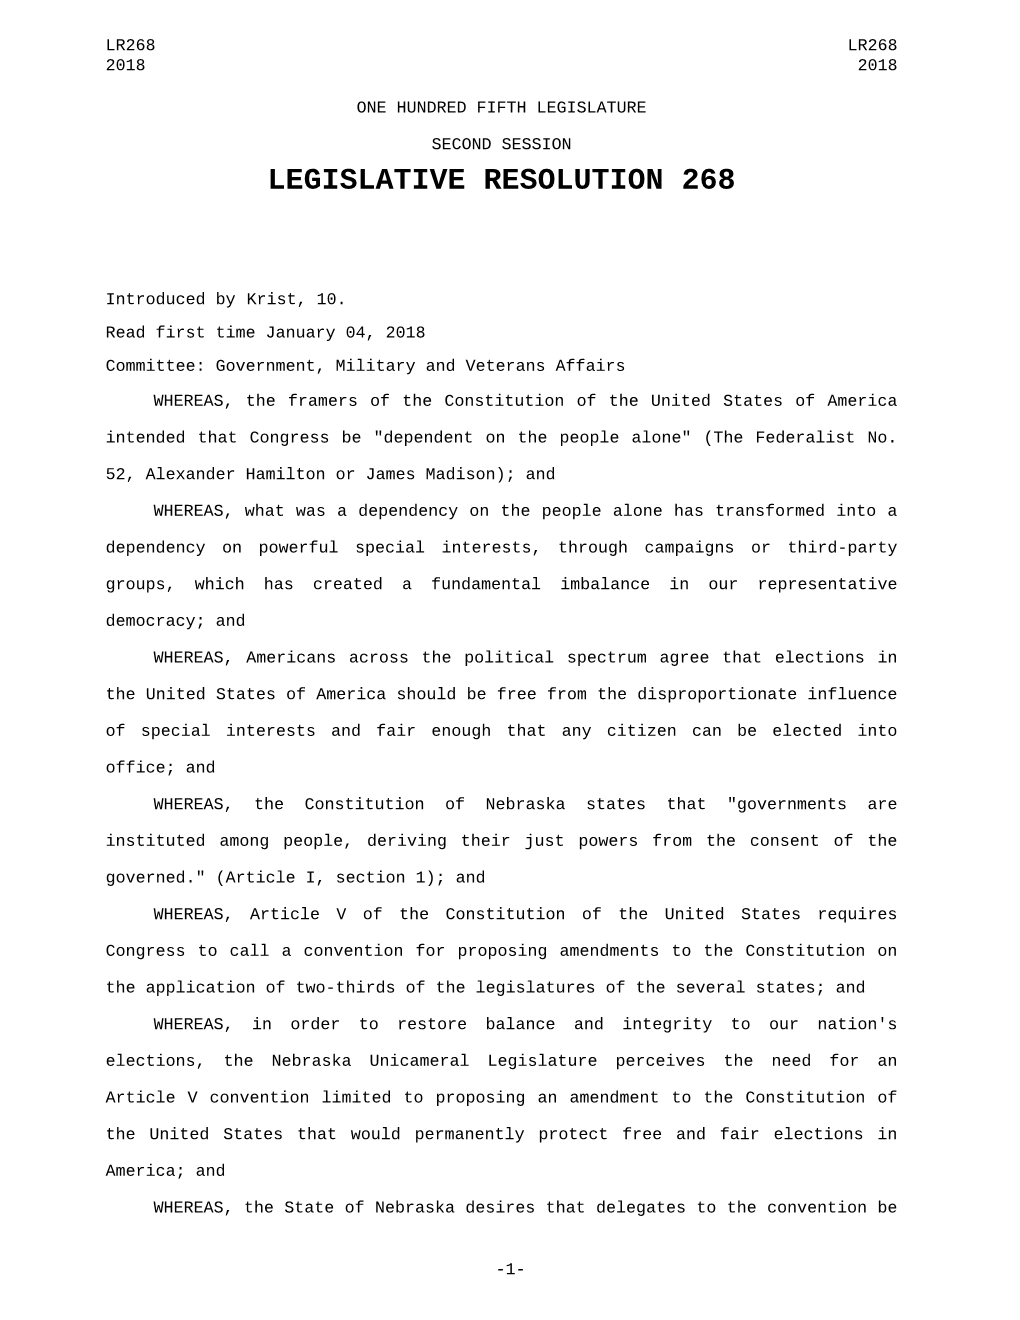 Legislative Resolution 268